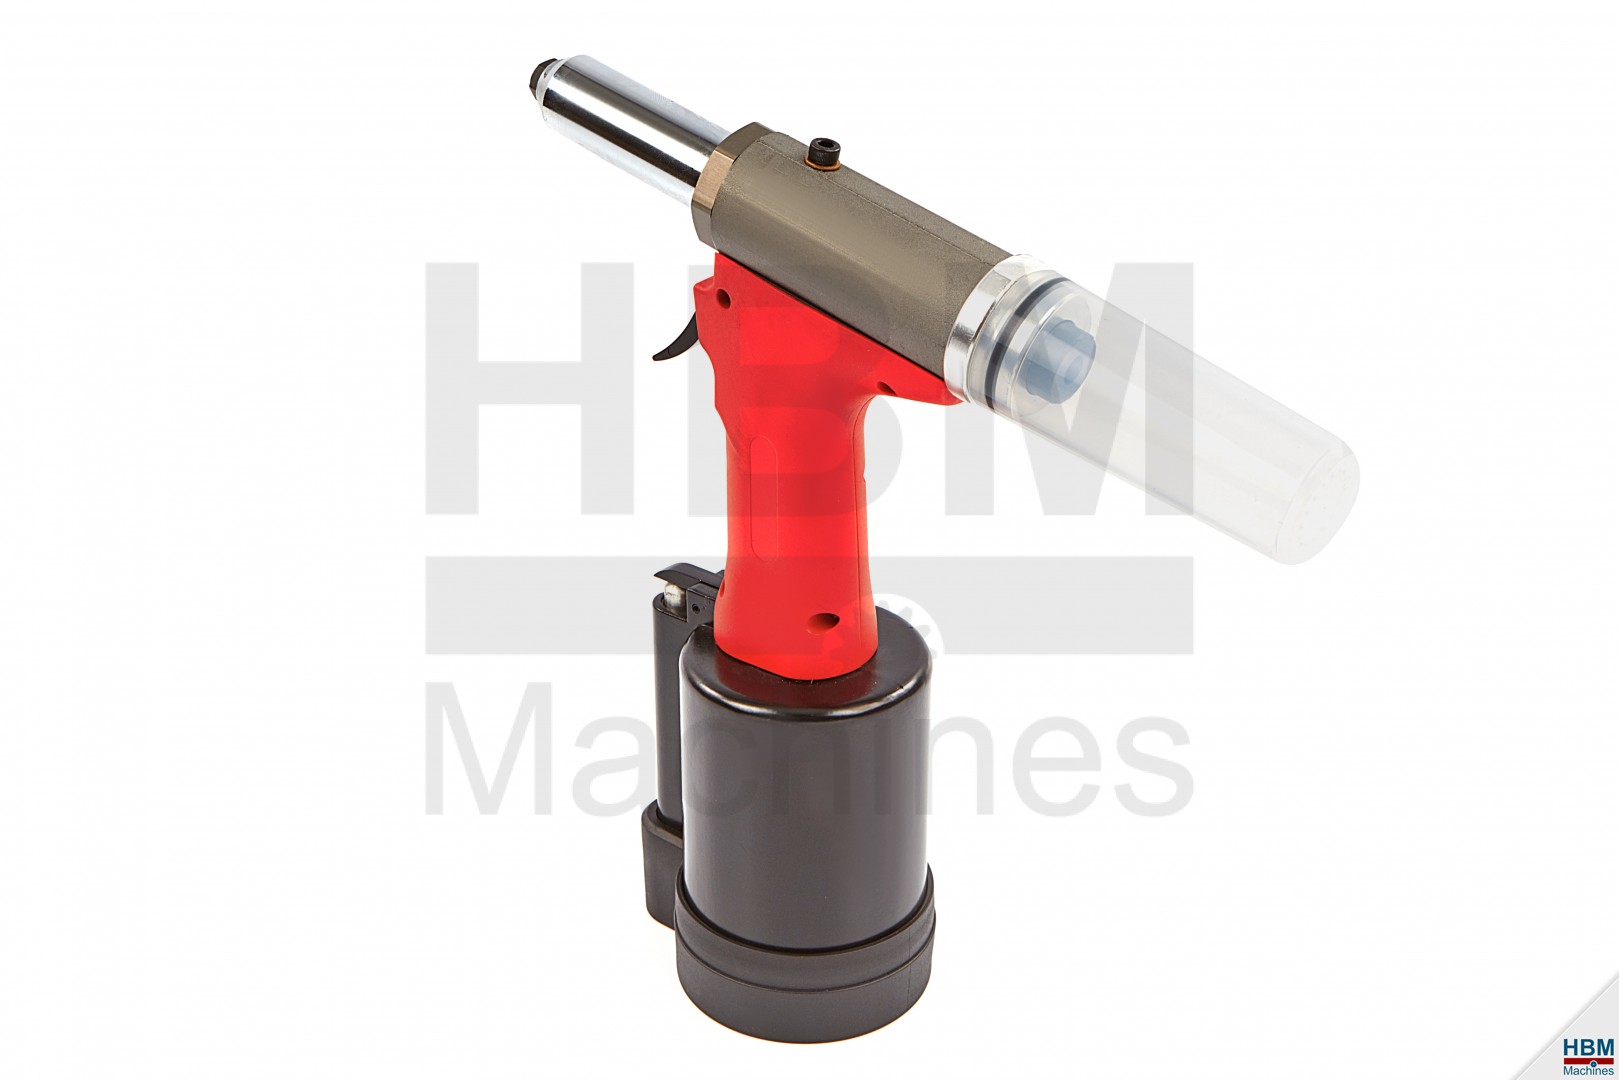 Pull-Link 03AS3 AS-3 Pince pneumatique pour rivets pop 4,8-6,4 mm